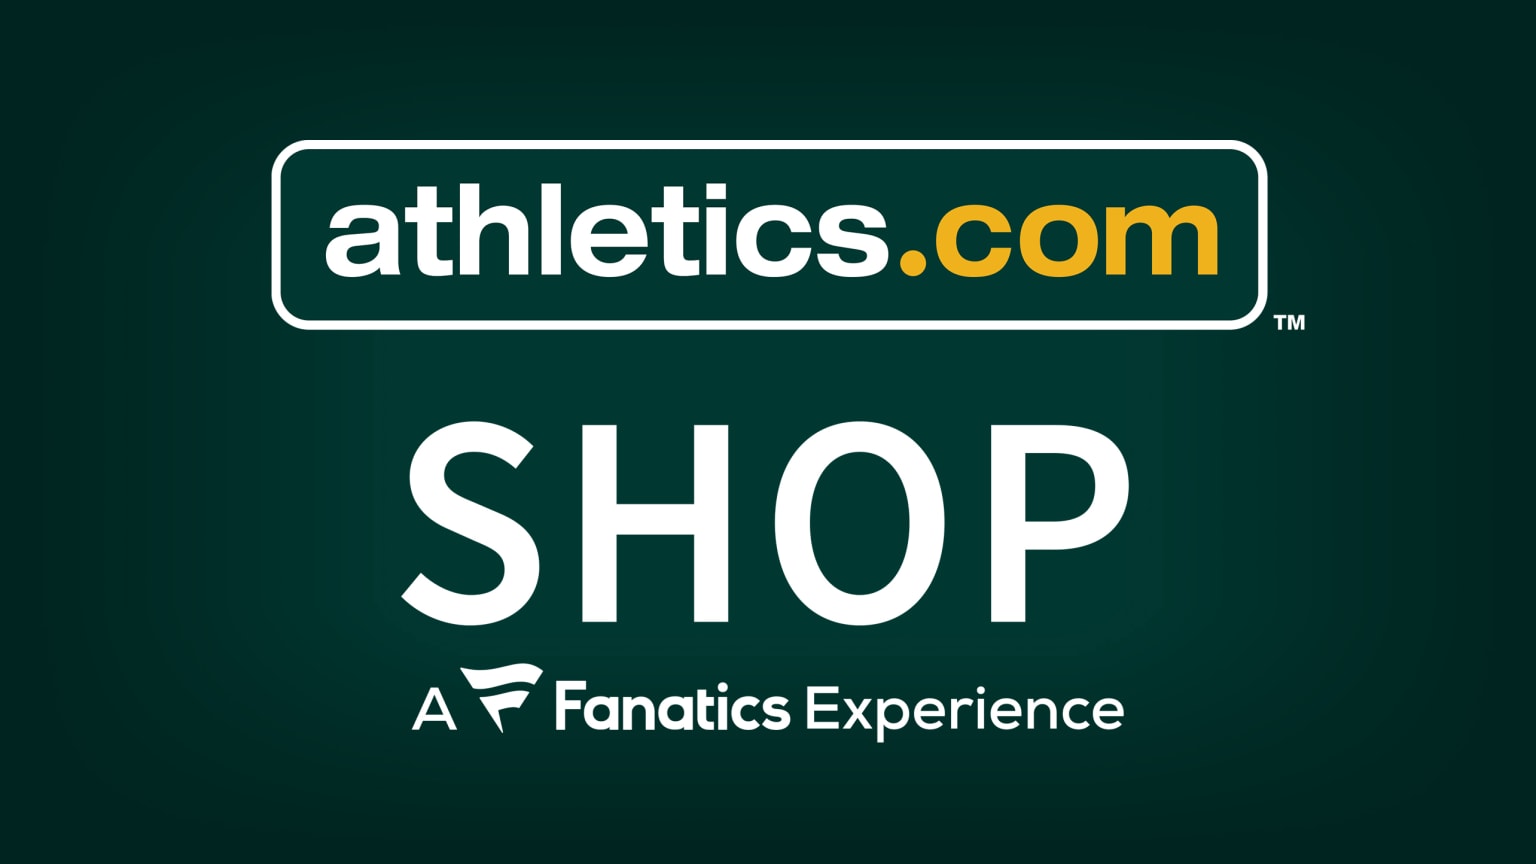 Official Oakland Athletics Website